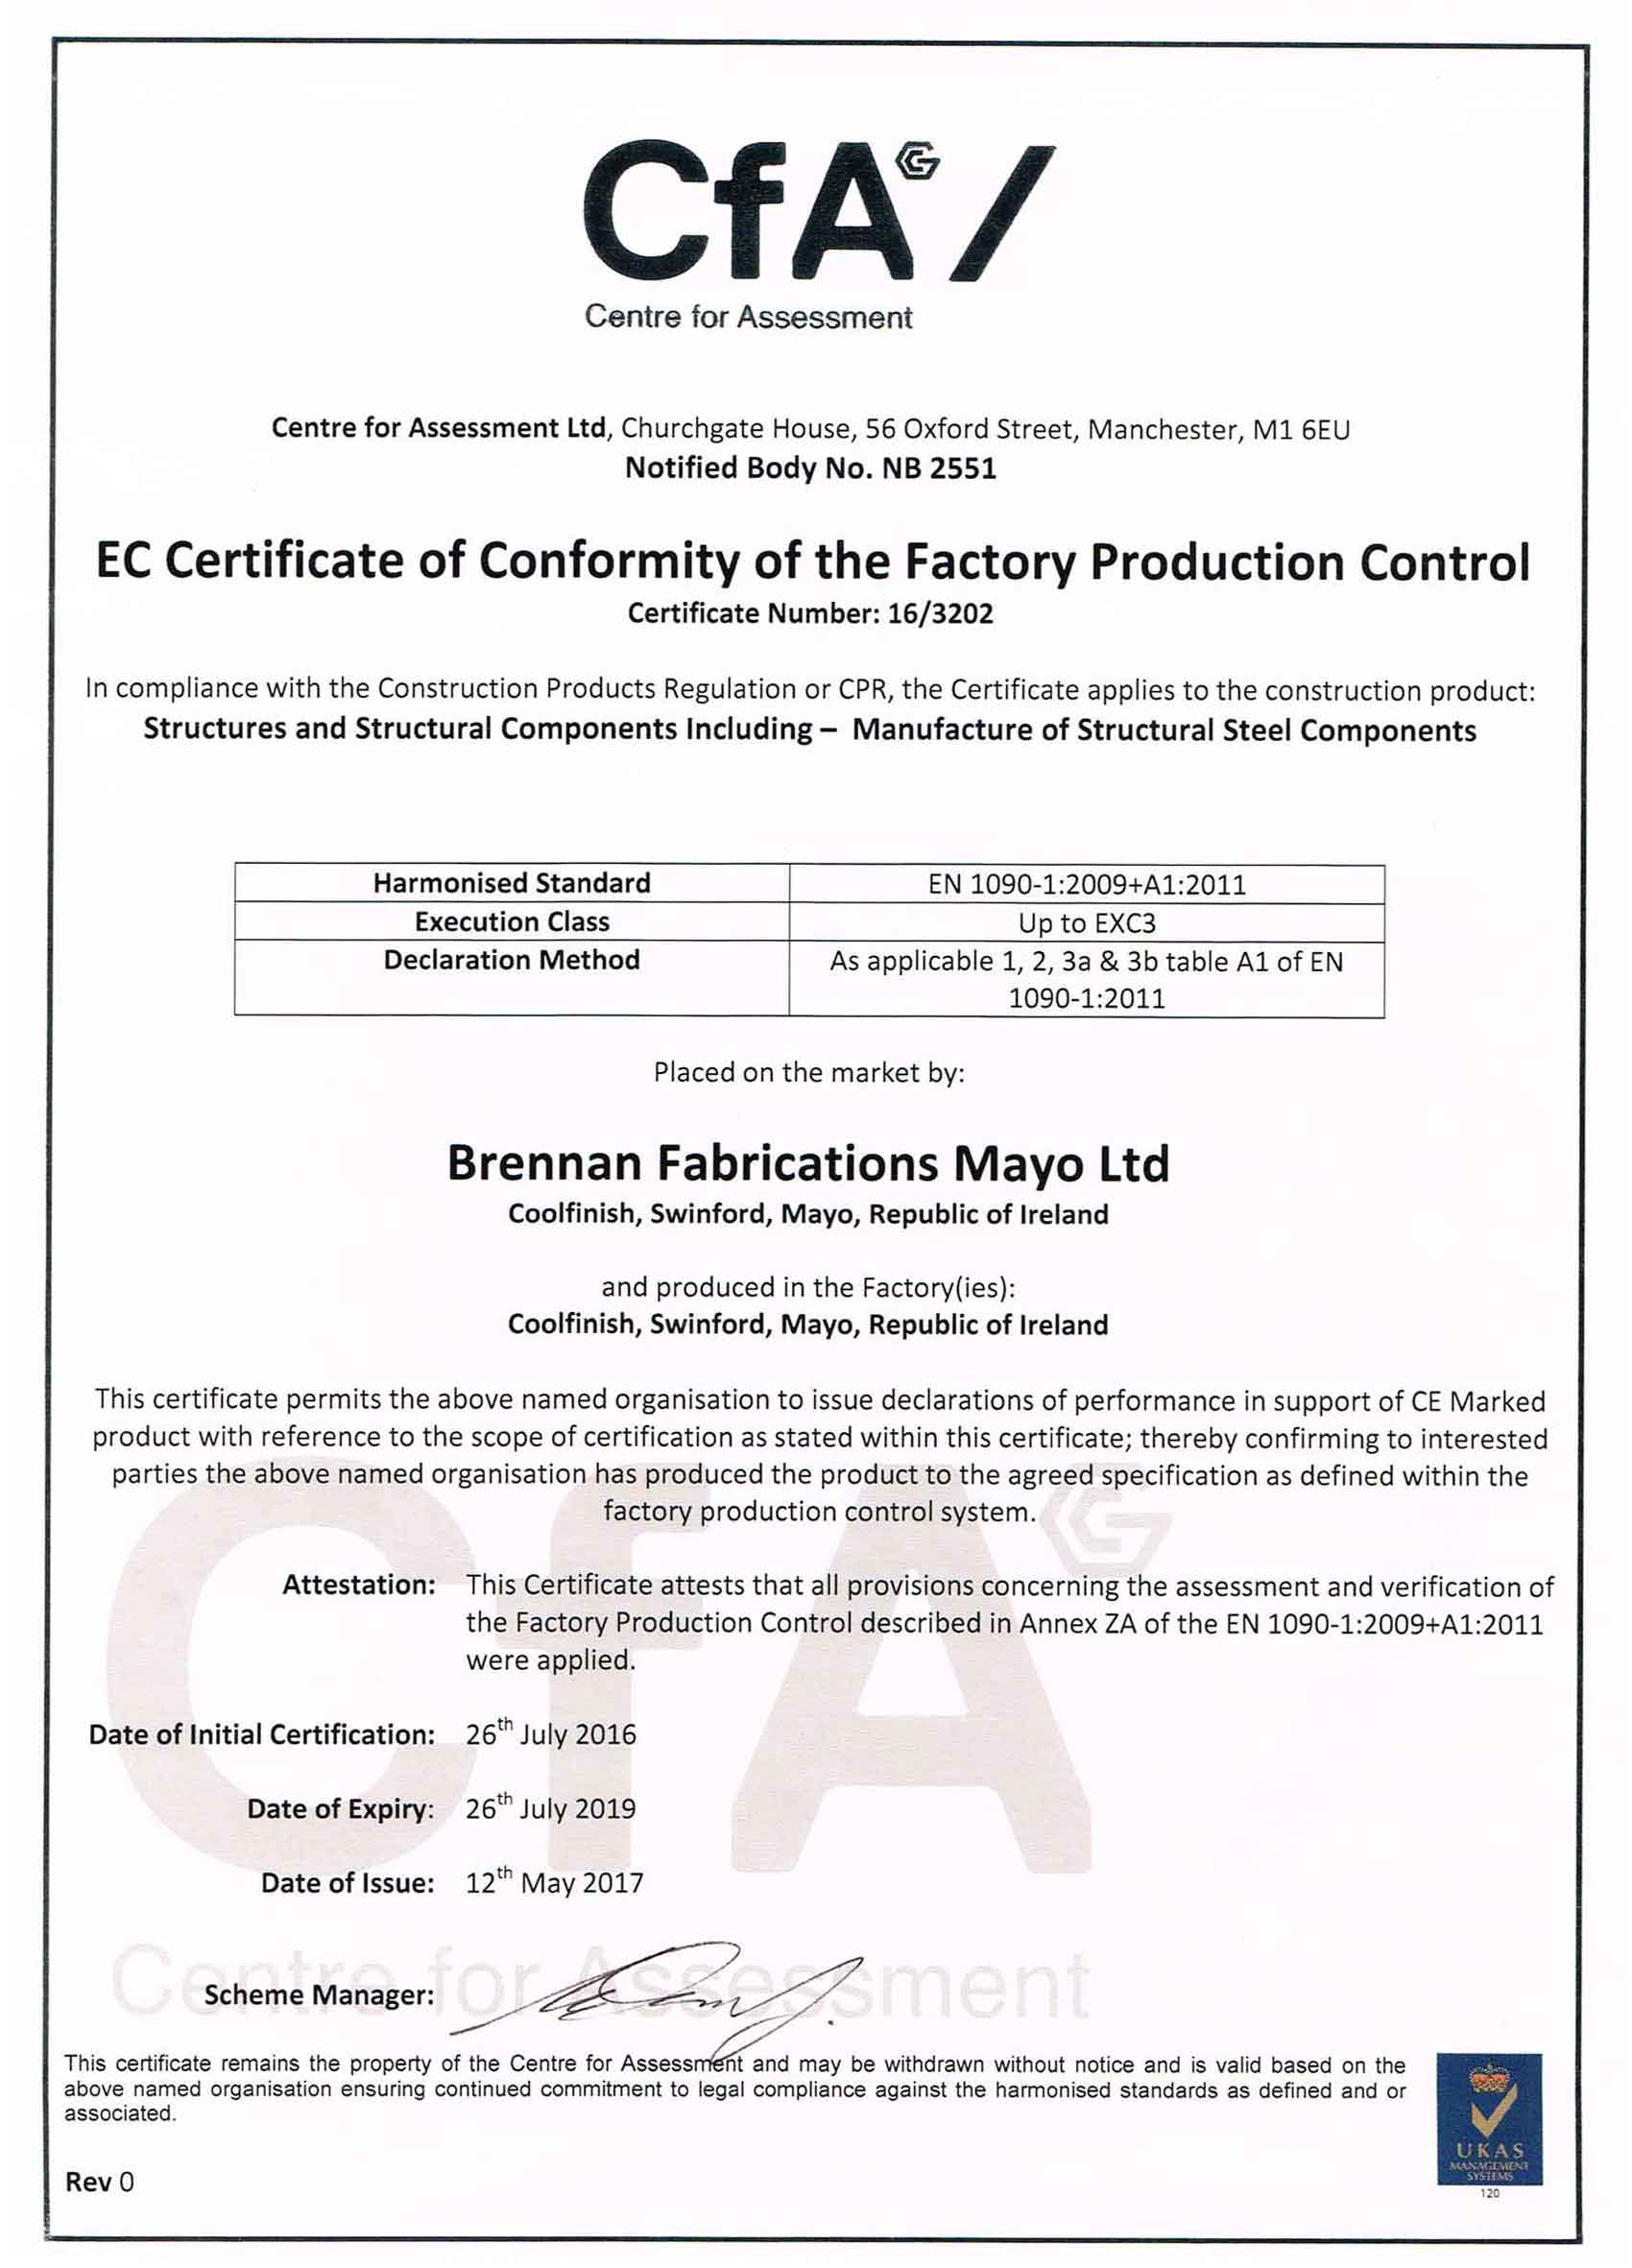 Brennan-Fabrications-Mayo-EN1090-Execution-Class-3-Certification